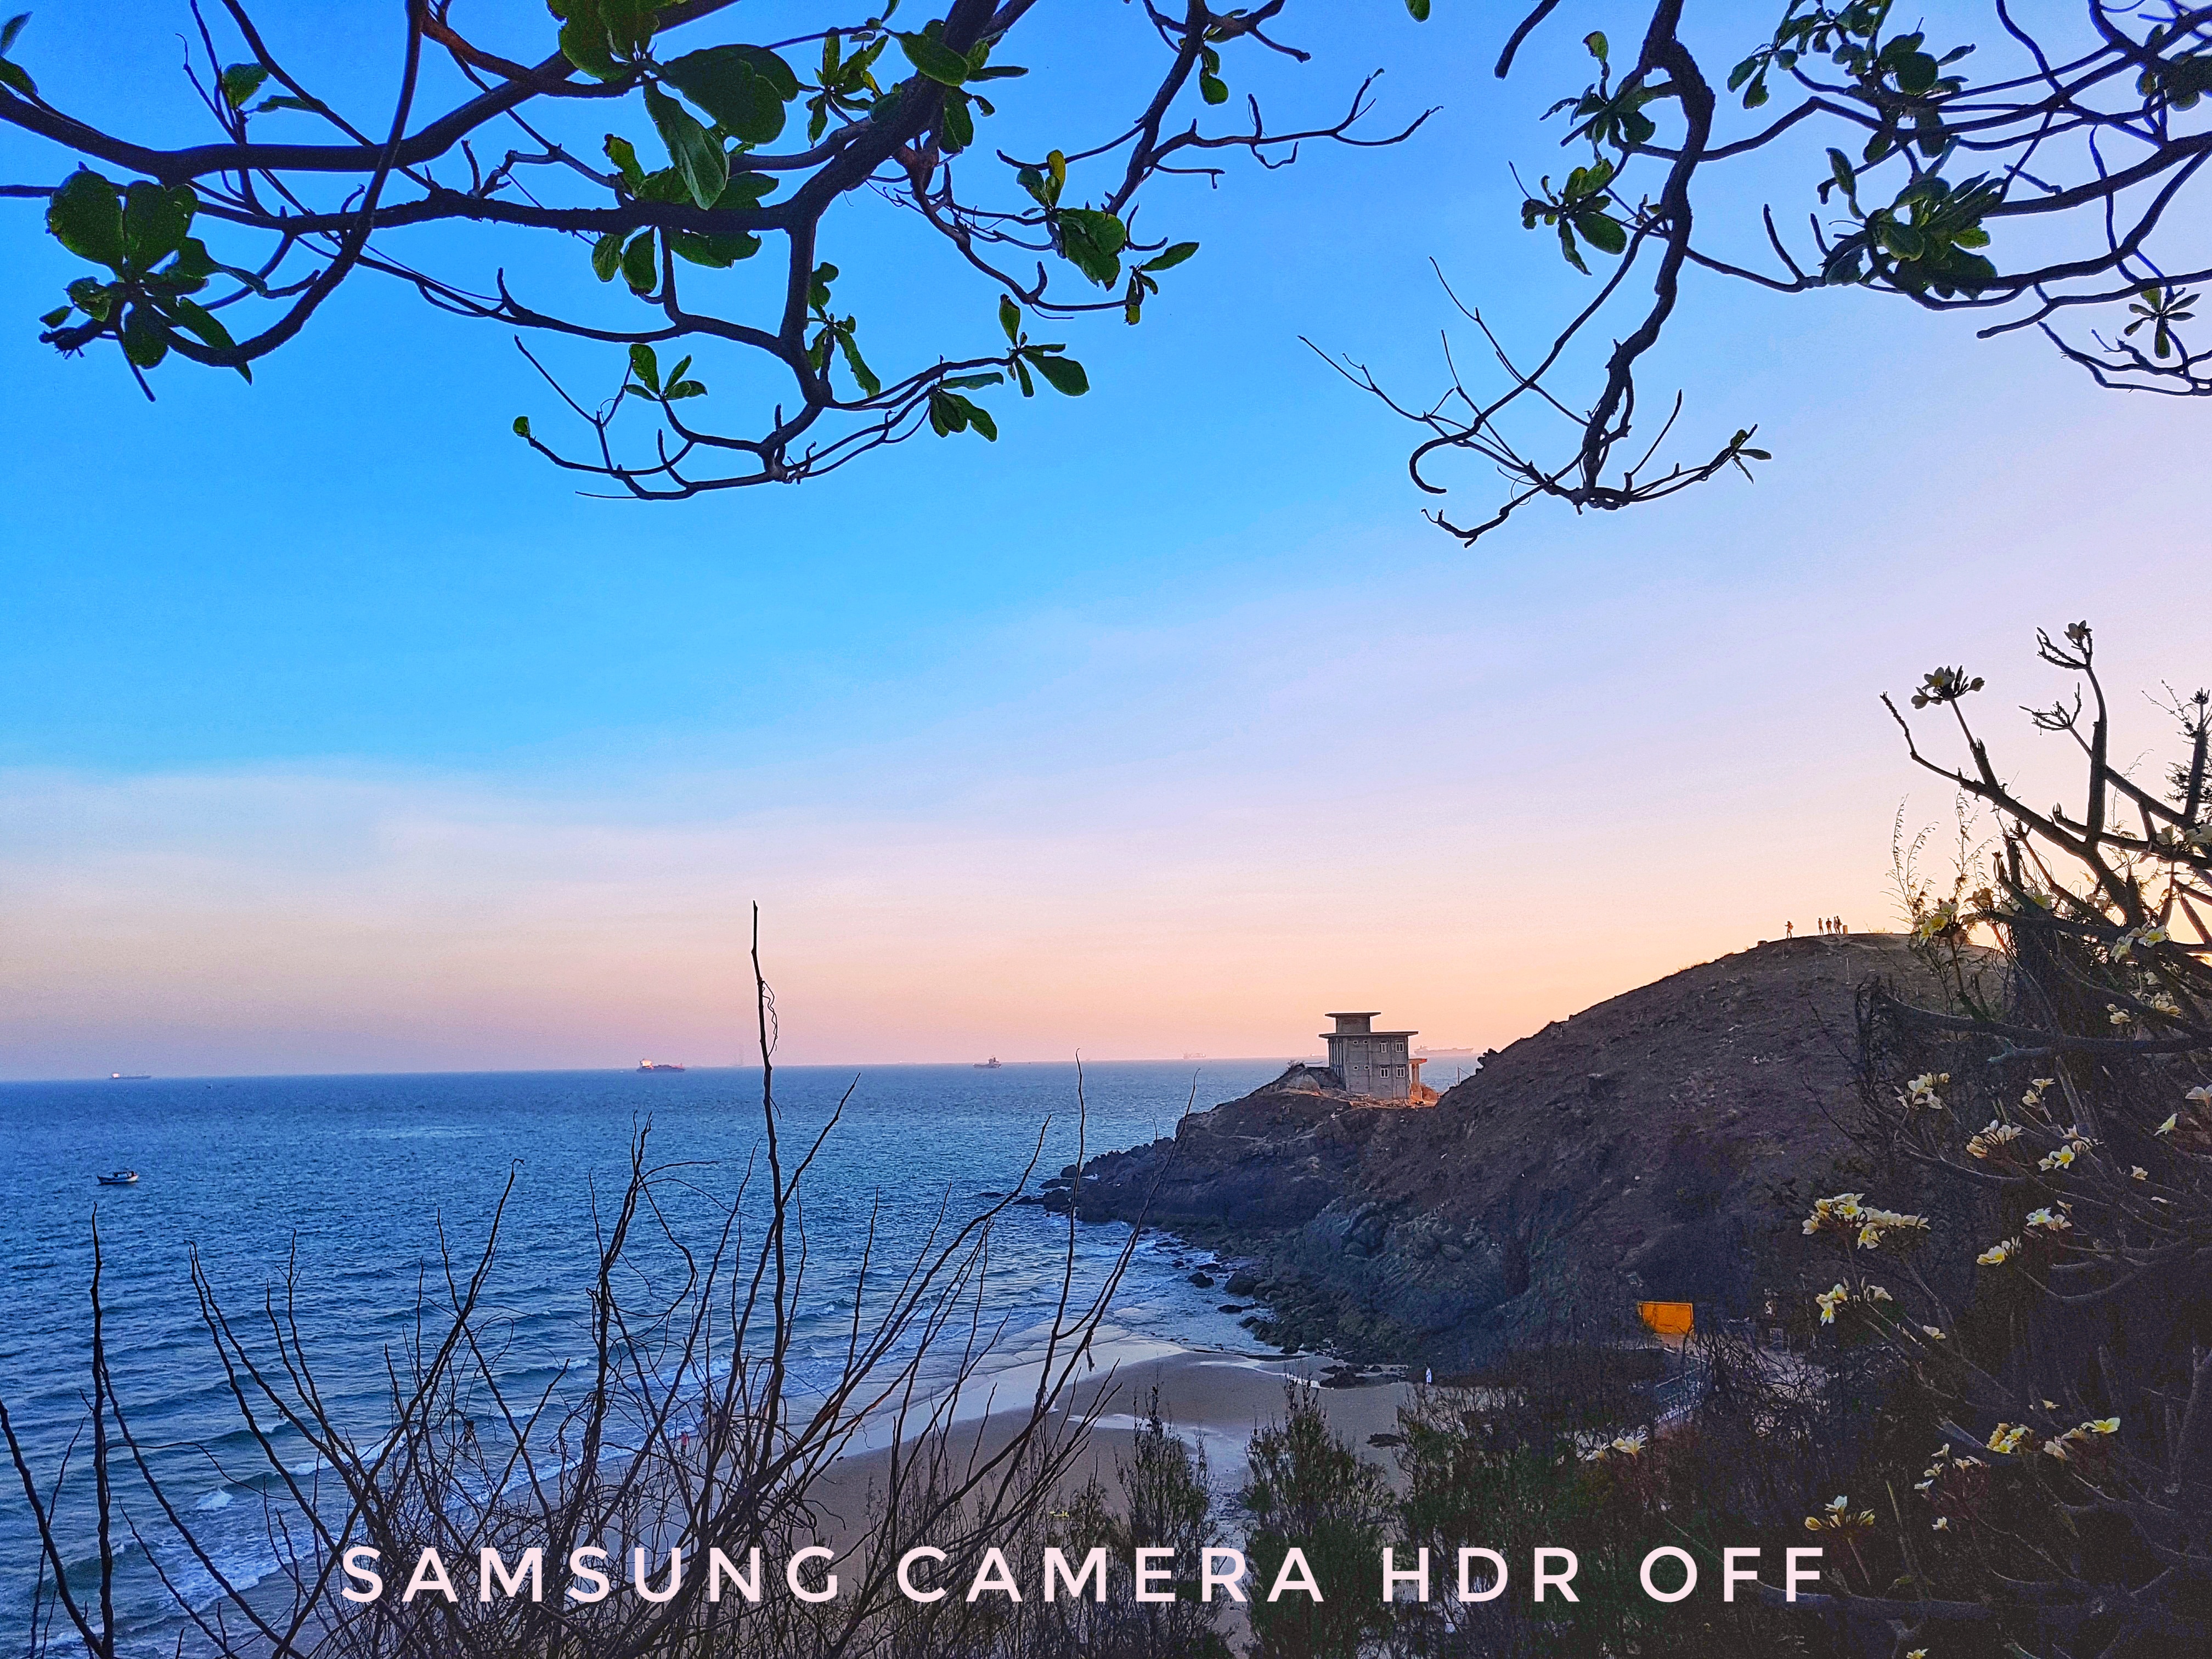 Samsung camera hdr off -01.jpeg